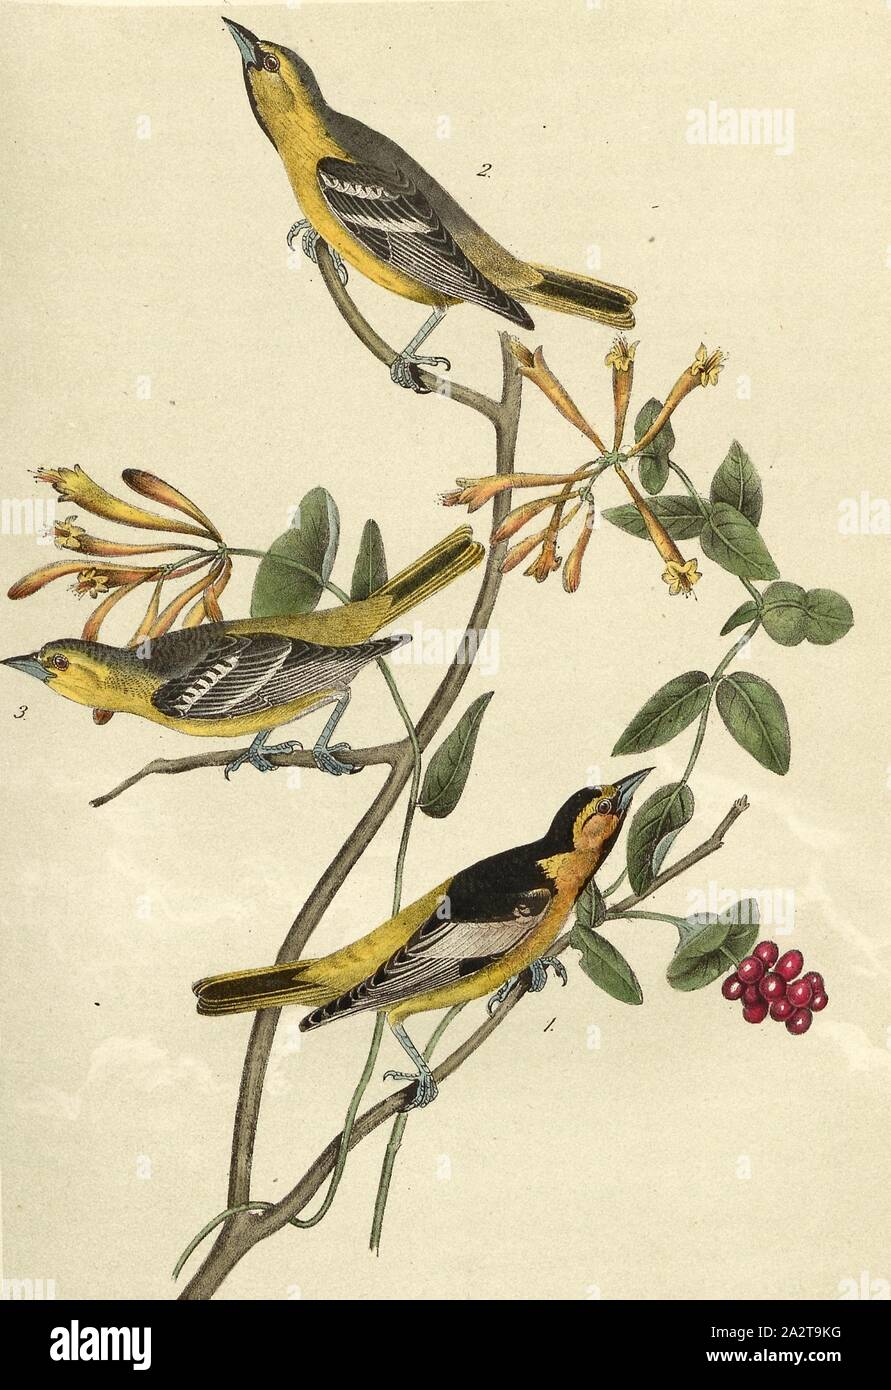 Bullock's Troopial - Caprifolium flavum, Bullock Trupial (Icterus bullockii), Honeysuckle, Signed: J.J. Audubon, J.T. Bowen, lithograph, Pl. 218 (vol. 4), Audubon, John James (drawn); Bowen, J. T. (lith.), 1856, John James Audubon: The birds of America: from drawings made in the United States and their territories. New York: Audubon, 1856 Stock Photo